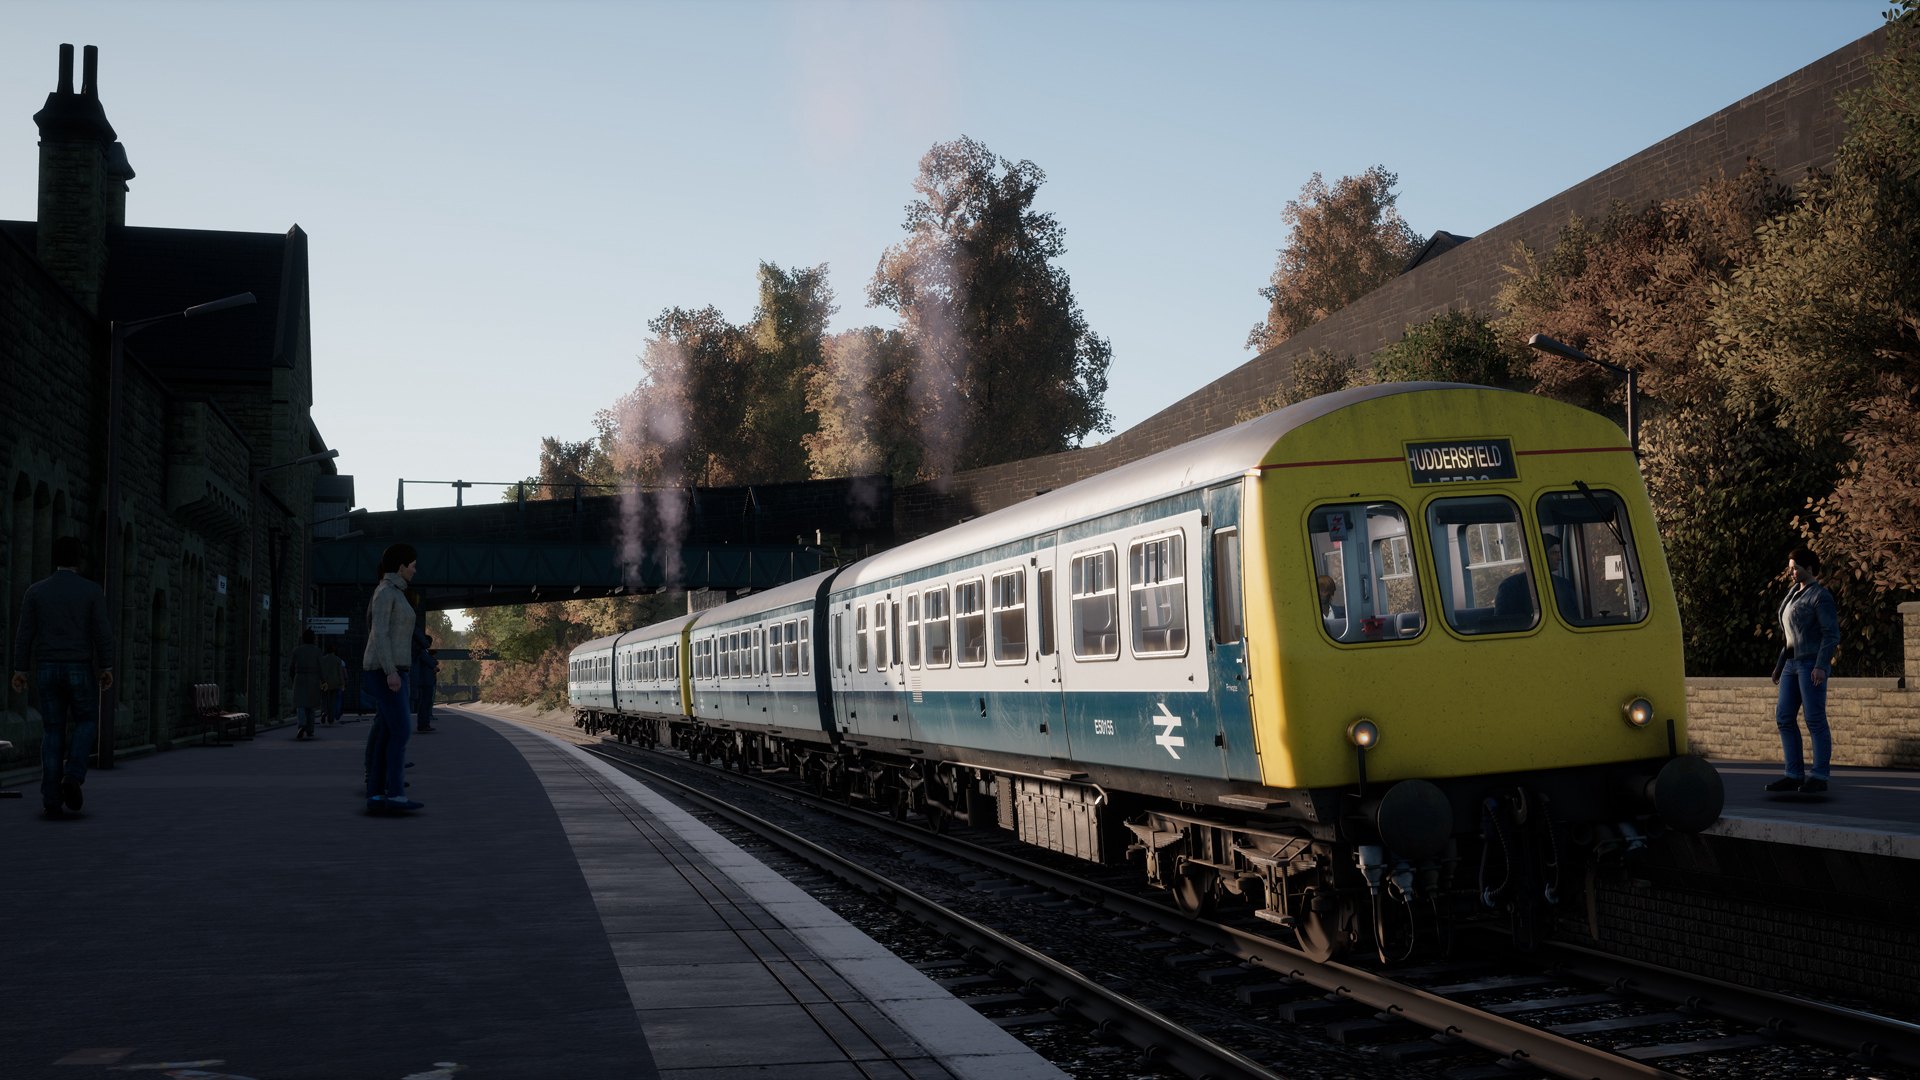 Train Sim World - Northern Trans-Pennine: Manchester - Leeds Route Add-On DLC Steam CD Key 5.03 usd